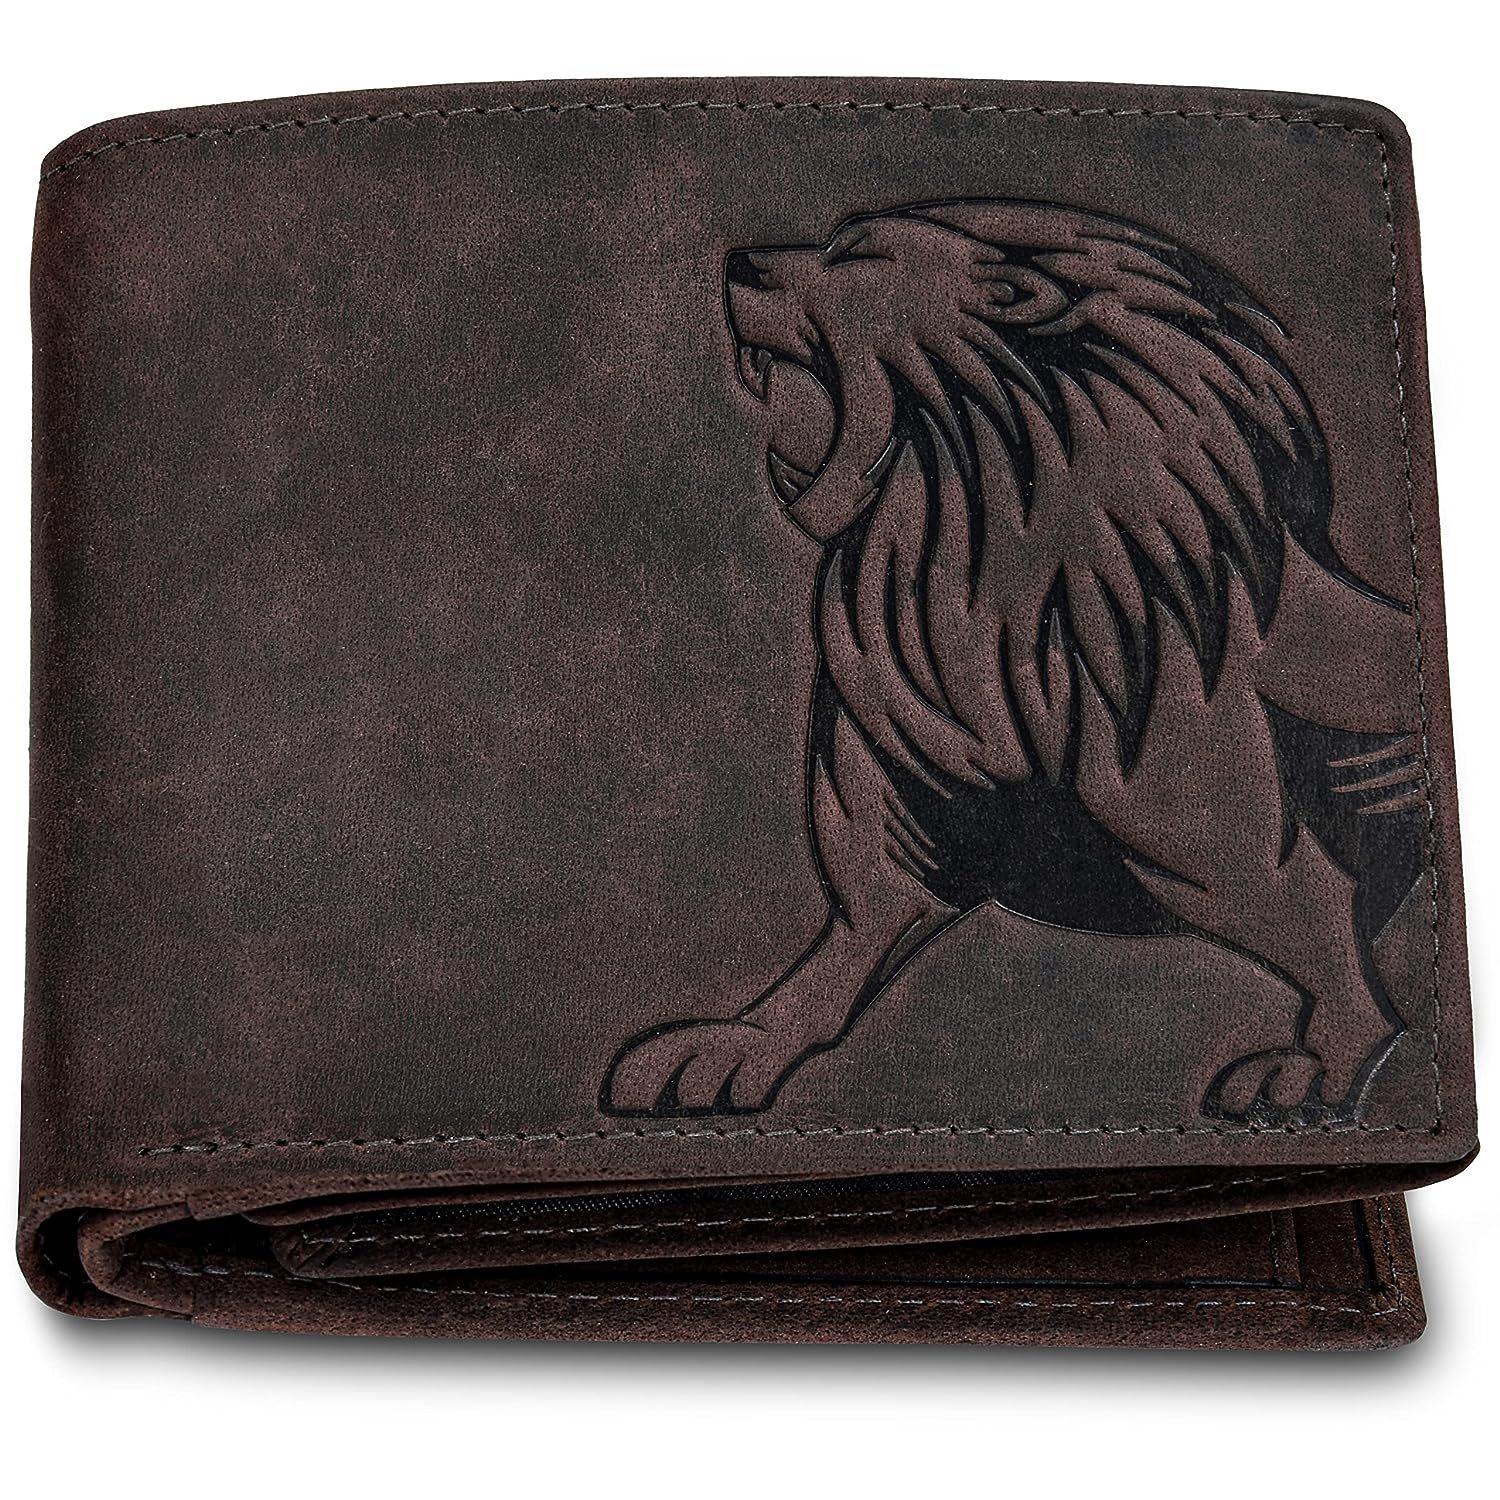 Vintage Goat leather Bags Leo RFID-blokkerende vintage bruine leren portemonnee voor heren